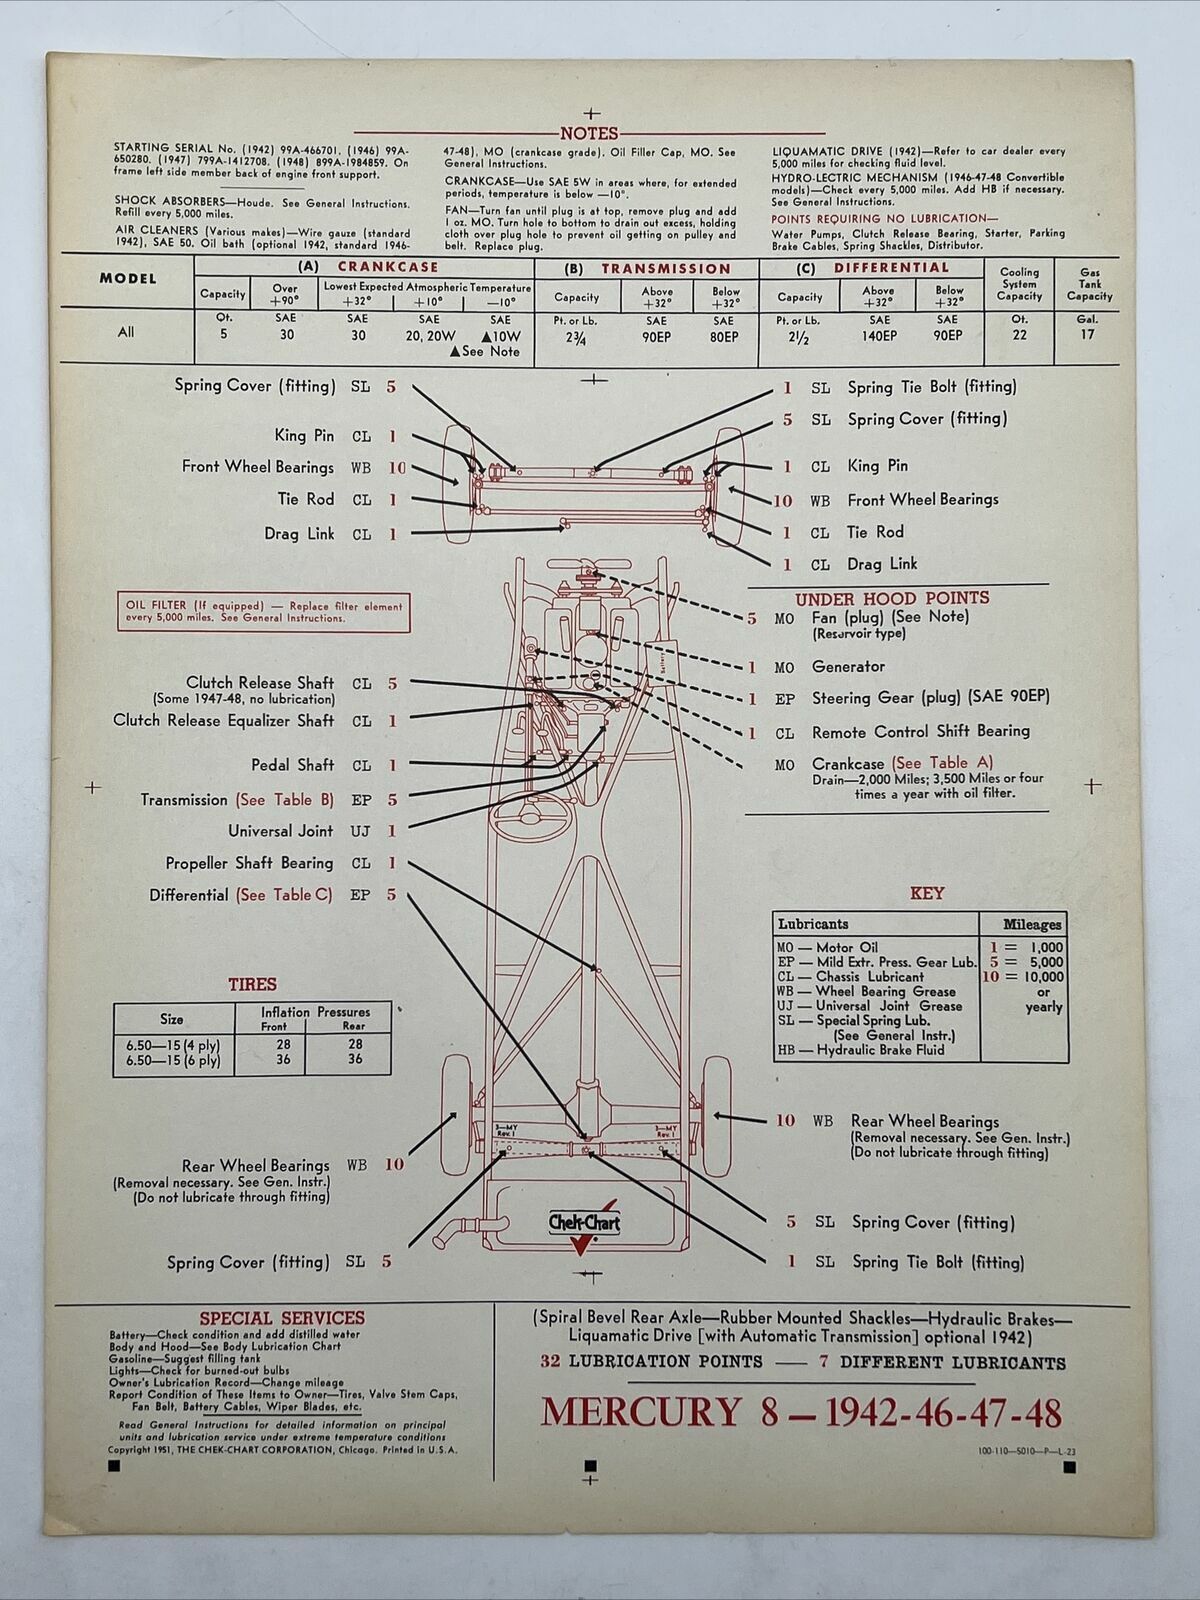 1942-48 MERCURY 8 Chek-Chart Lubrication Points Lubricants 100-110--5010--P-L-23